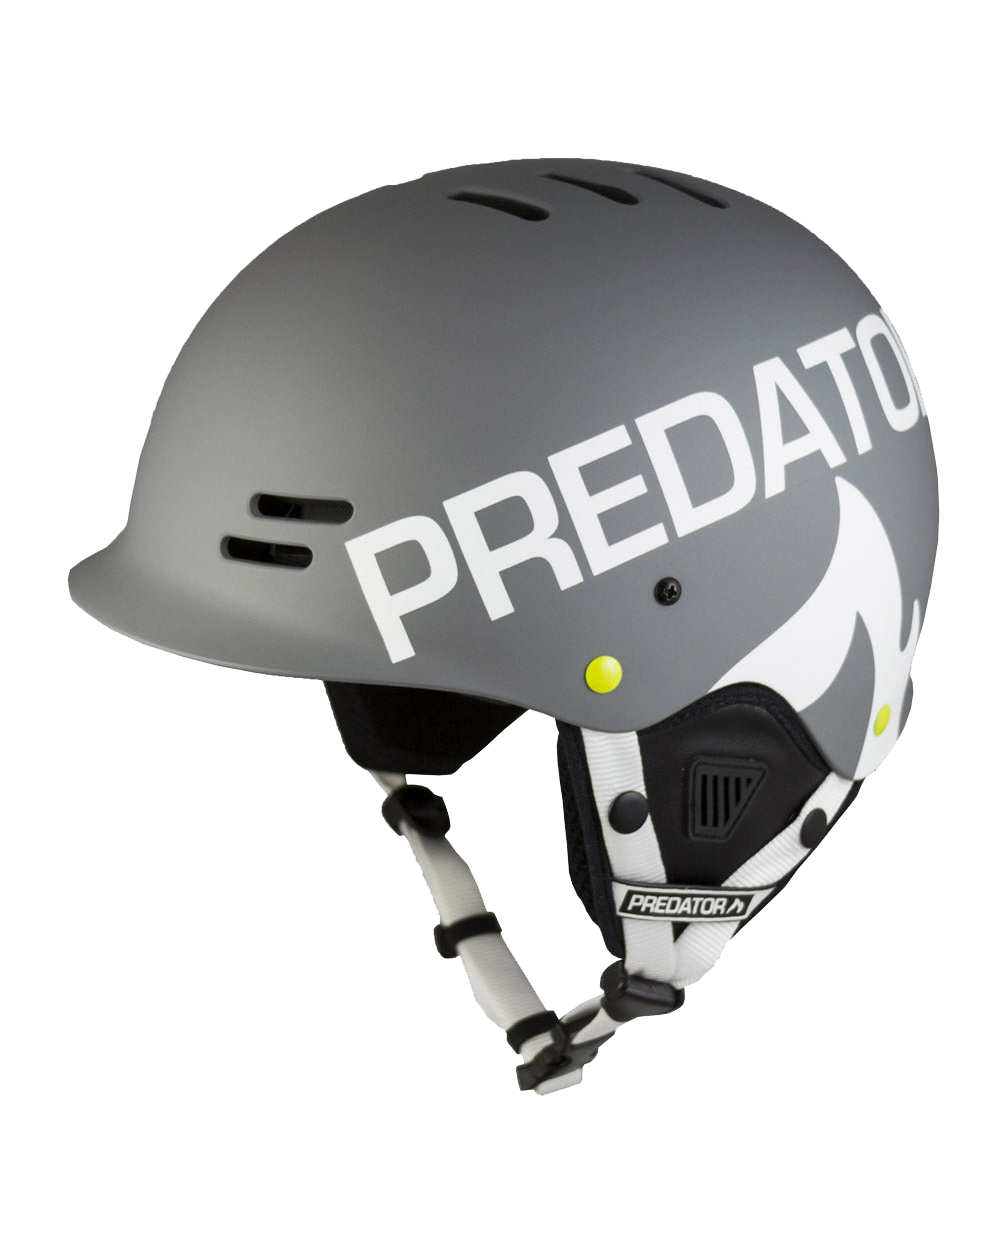 Predator FR7-W Helmet